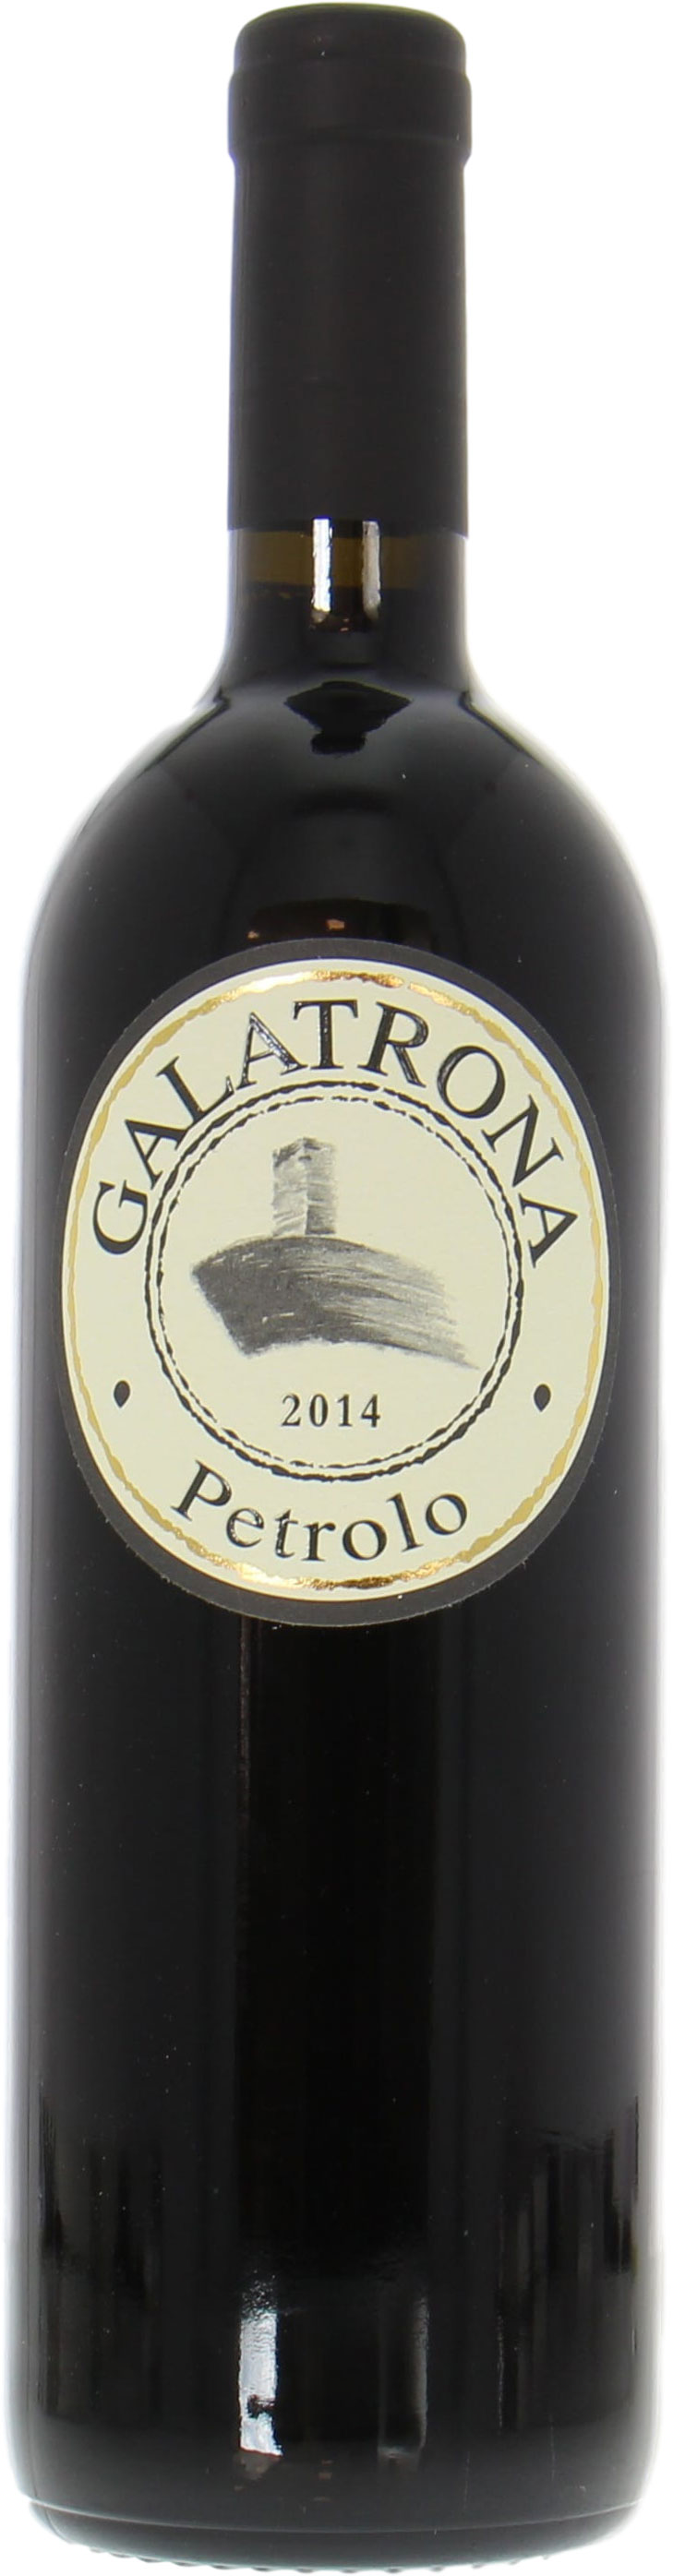 Petrolo - Galatrona 2014